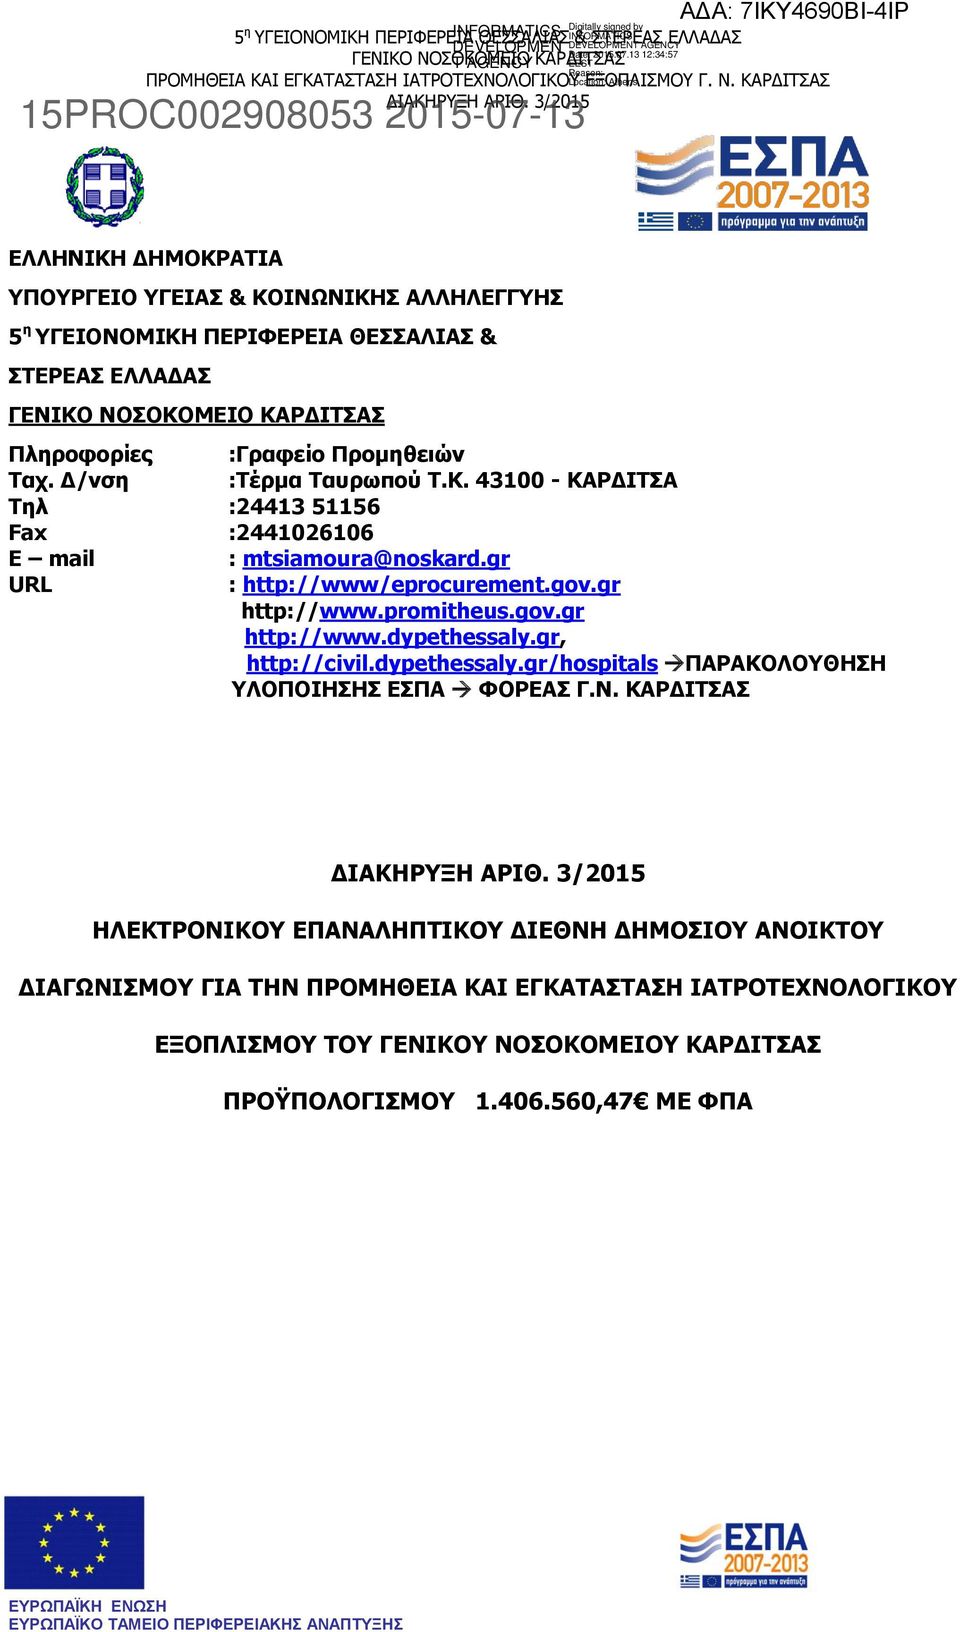 gov.gr http://www.promitheus.gov.gr http://www.dypethessaly.gr, http://civil.dypethessaly.gr/hospitals ΠΑΡΑΚΟΛΟΥΘΗΣΗ ΥΛΟΠΟΙΗΣΗΣ ΕΣΠΑ ΦΟΡΕΑΣ Γ.Ν.